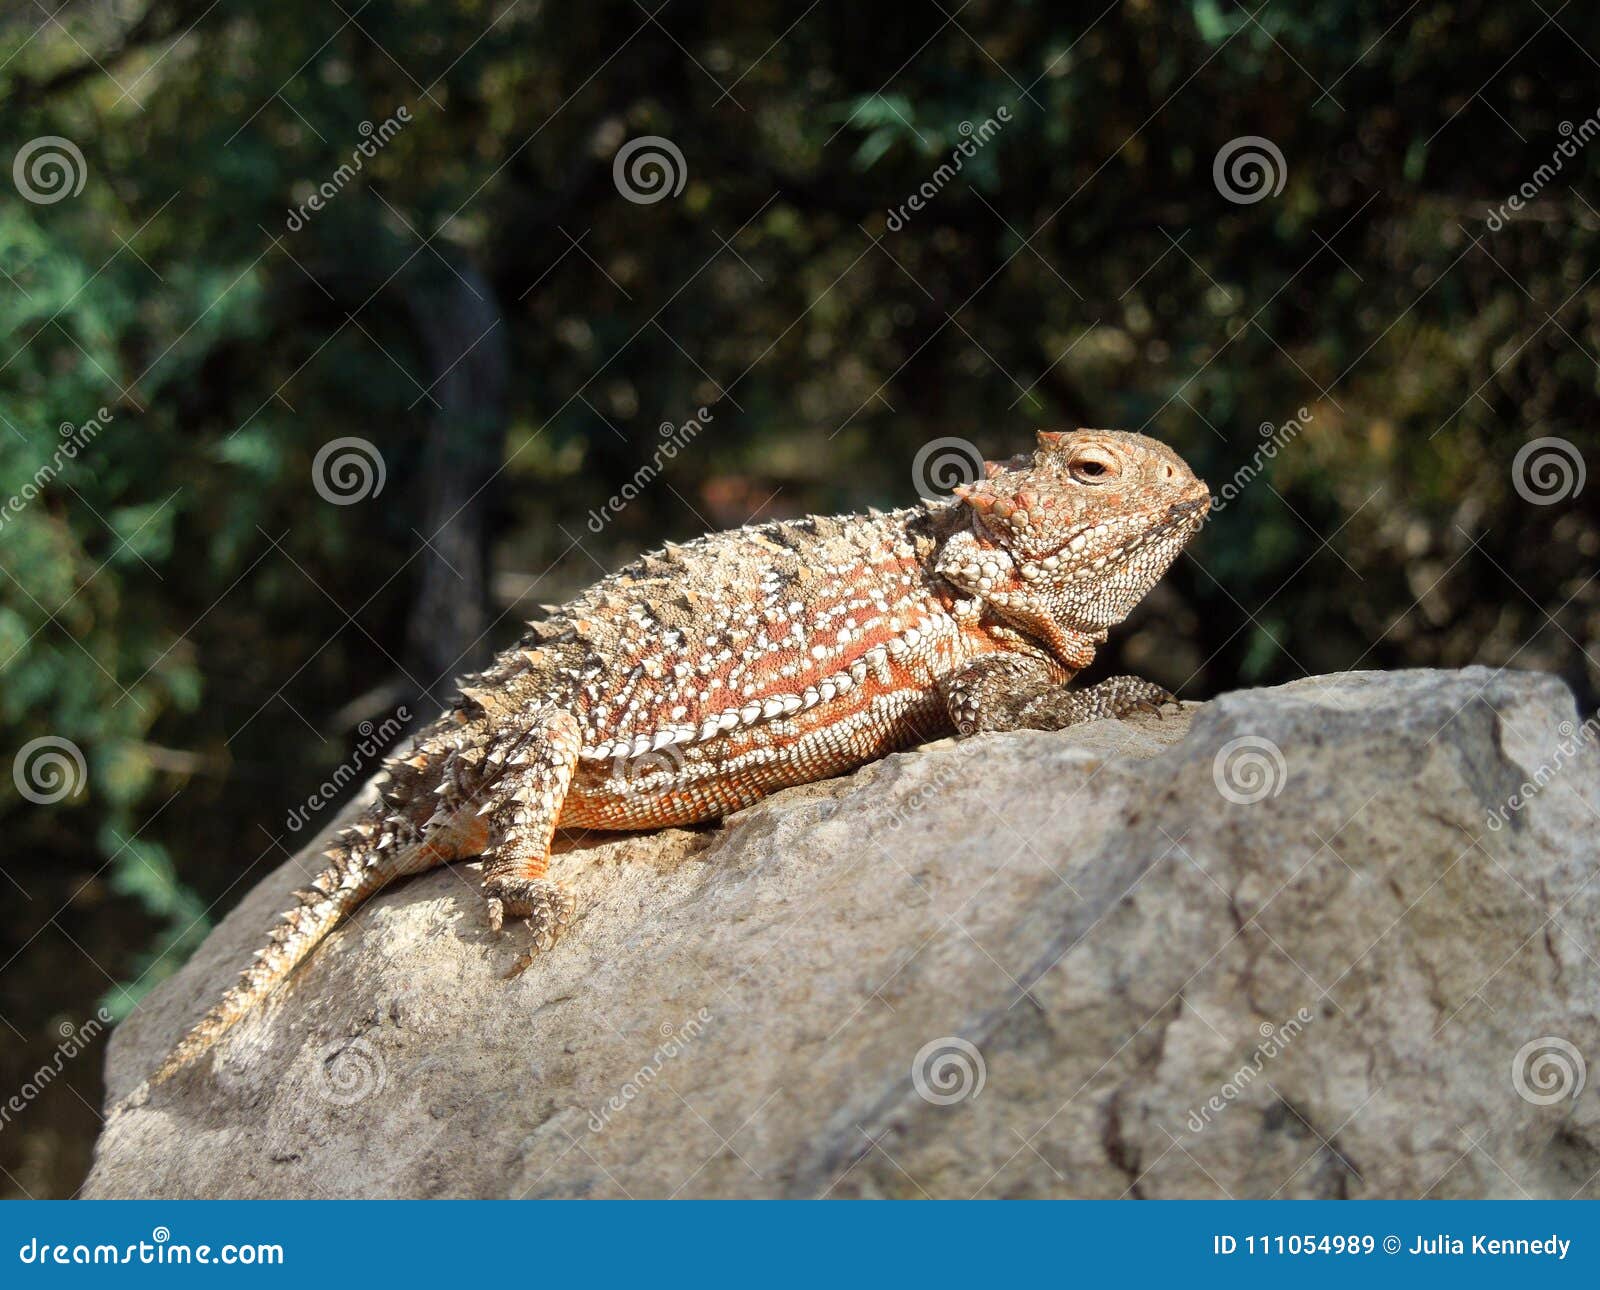 horned lizard basking in the sun on a rock